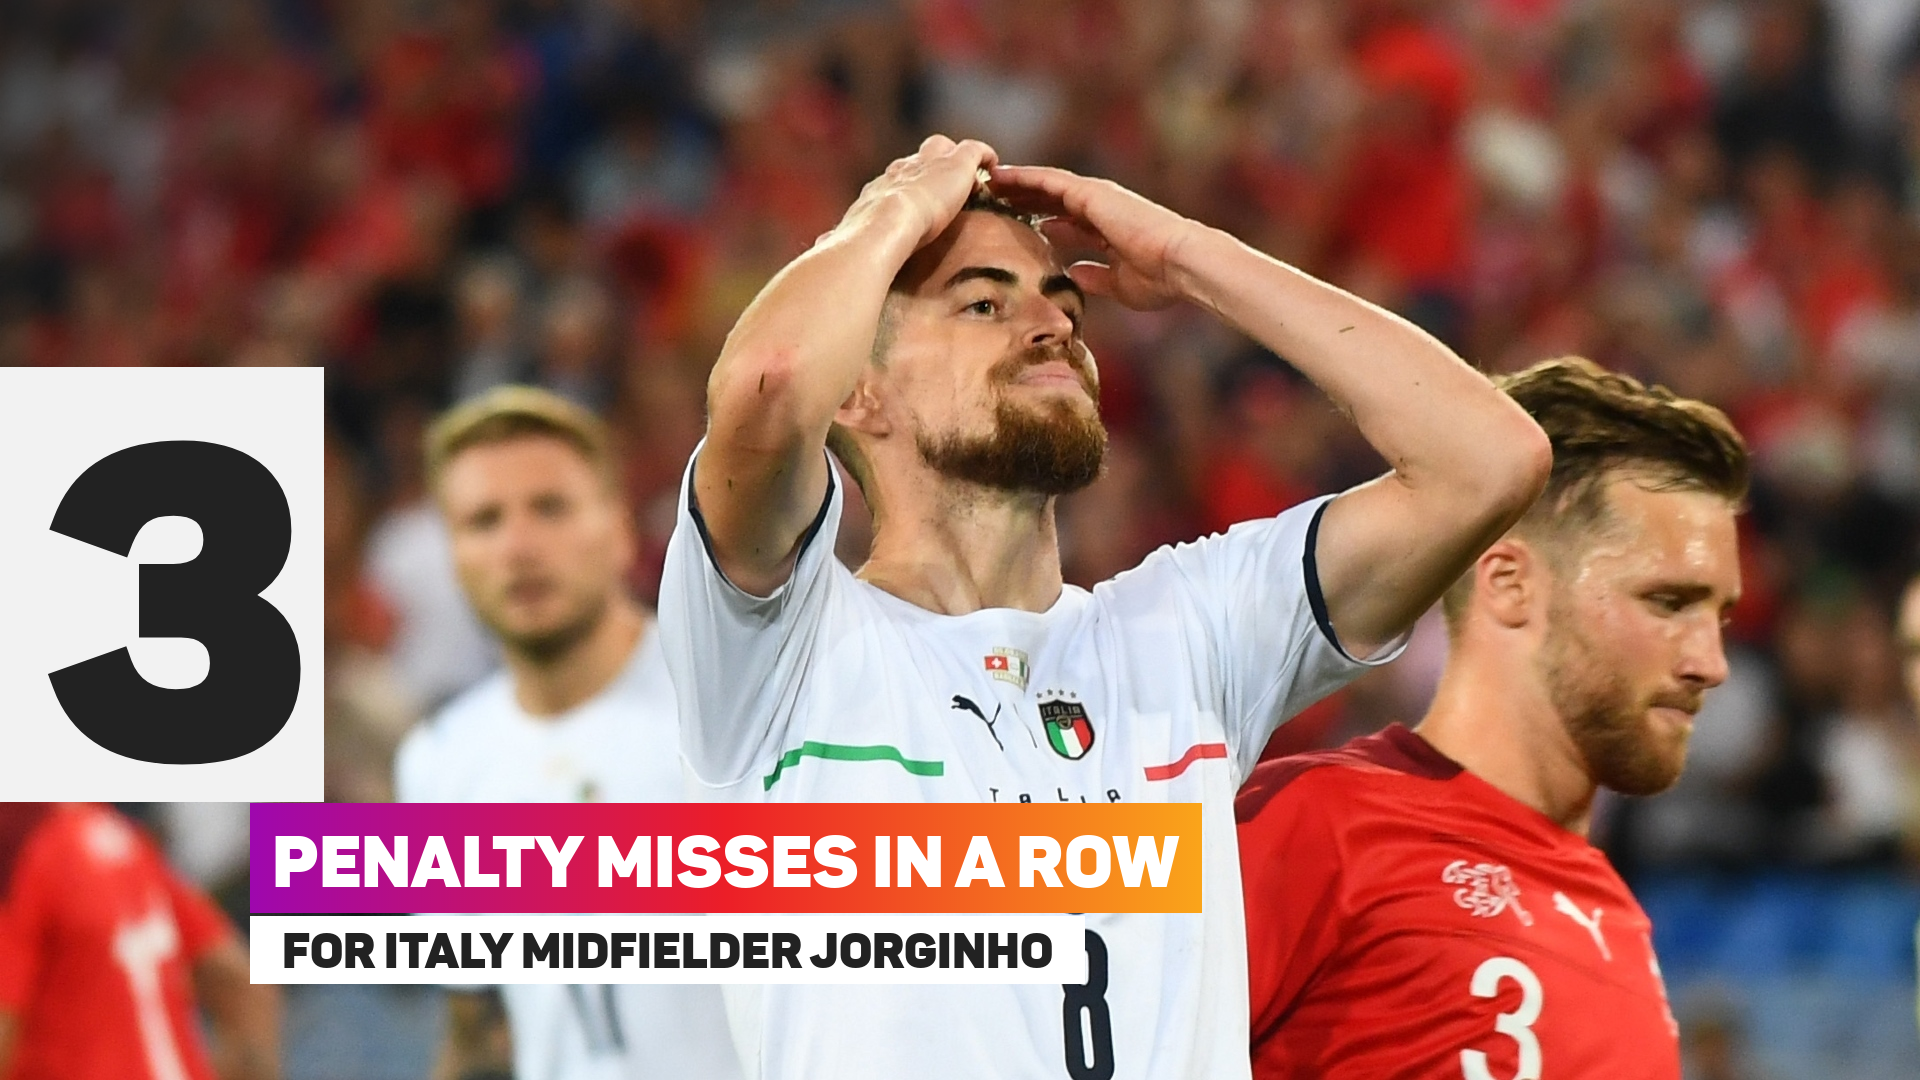 Jorginho has missed three penalties in a row for Italy